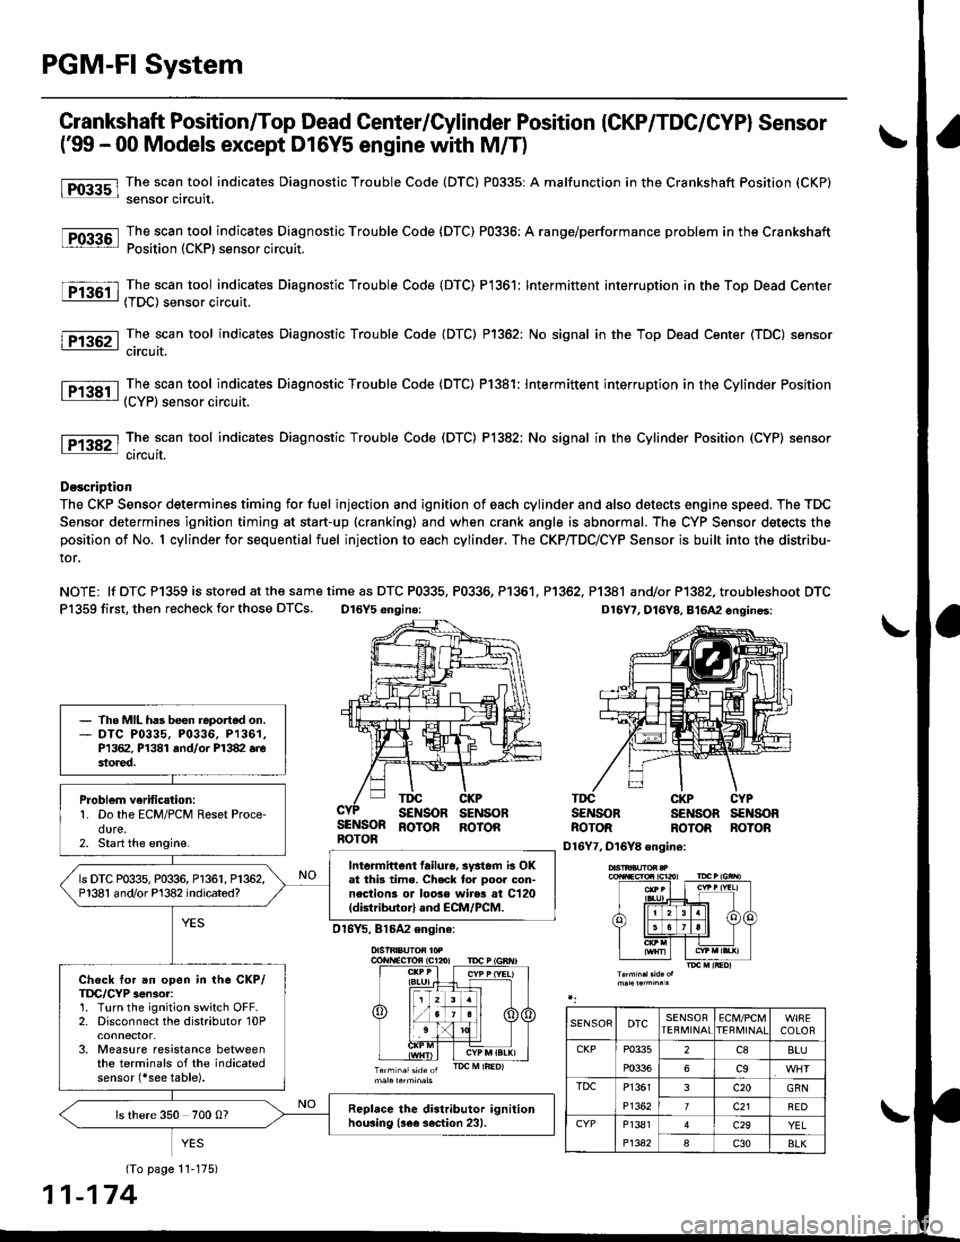 HONDA CIVIC 1998 6.G User Guide PGM-FI System
l-Fos3sl
tFos36l
tF1361 l
Fr362-1
tF13sil
Crankshaft Position/Top Dead Center/Cylinder Position (CKP/TDC/CYPI Sensor
f99 - 00 Models except D16Y5 engine with M/T)
The scan tool indicates